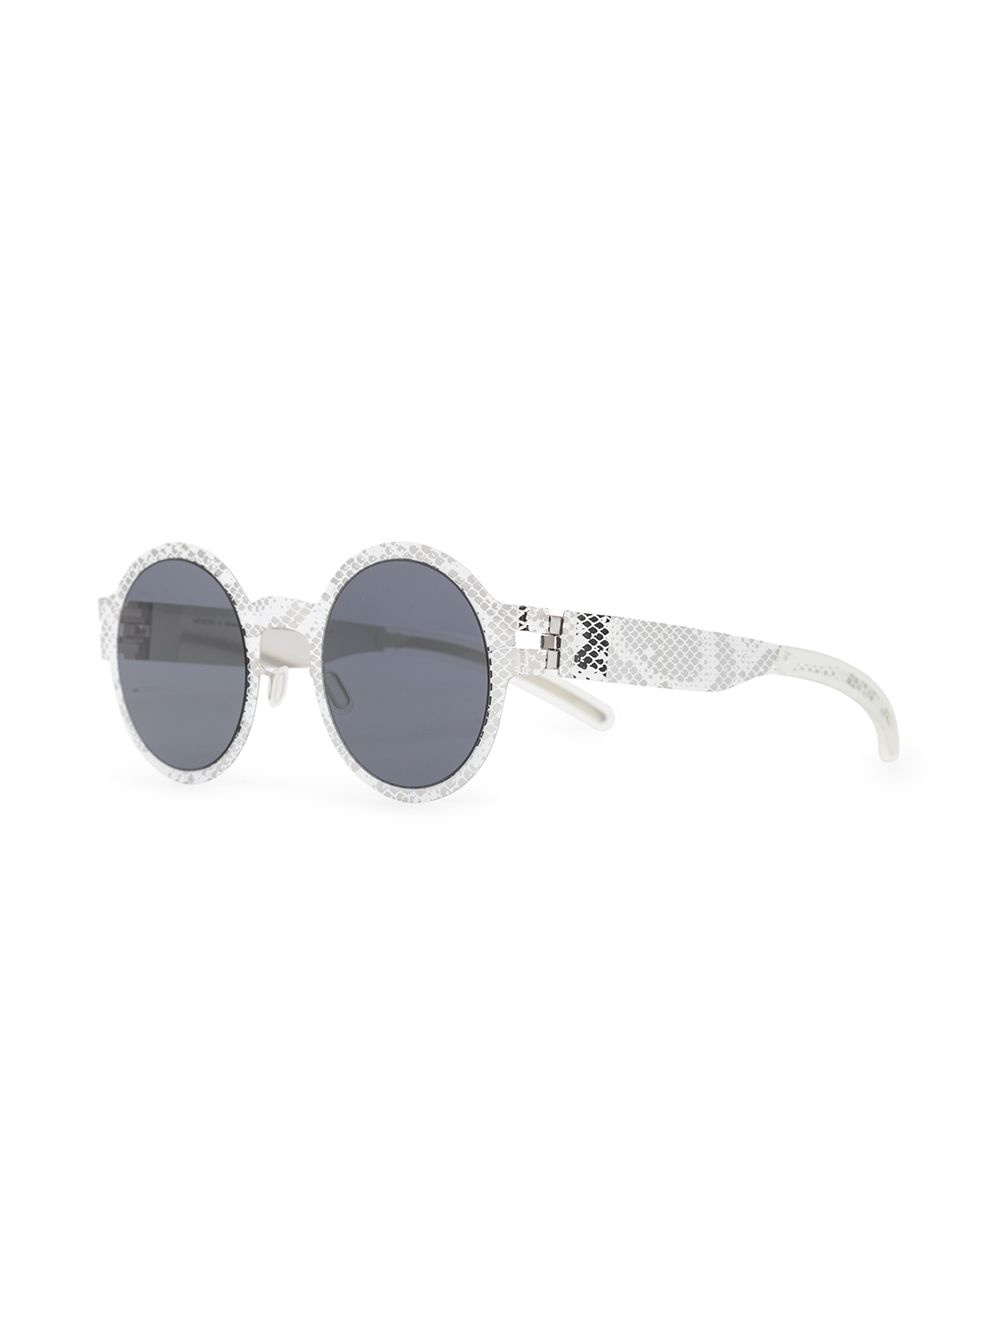 snake-print round sunglasses - 2